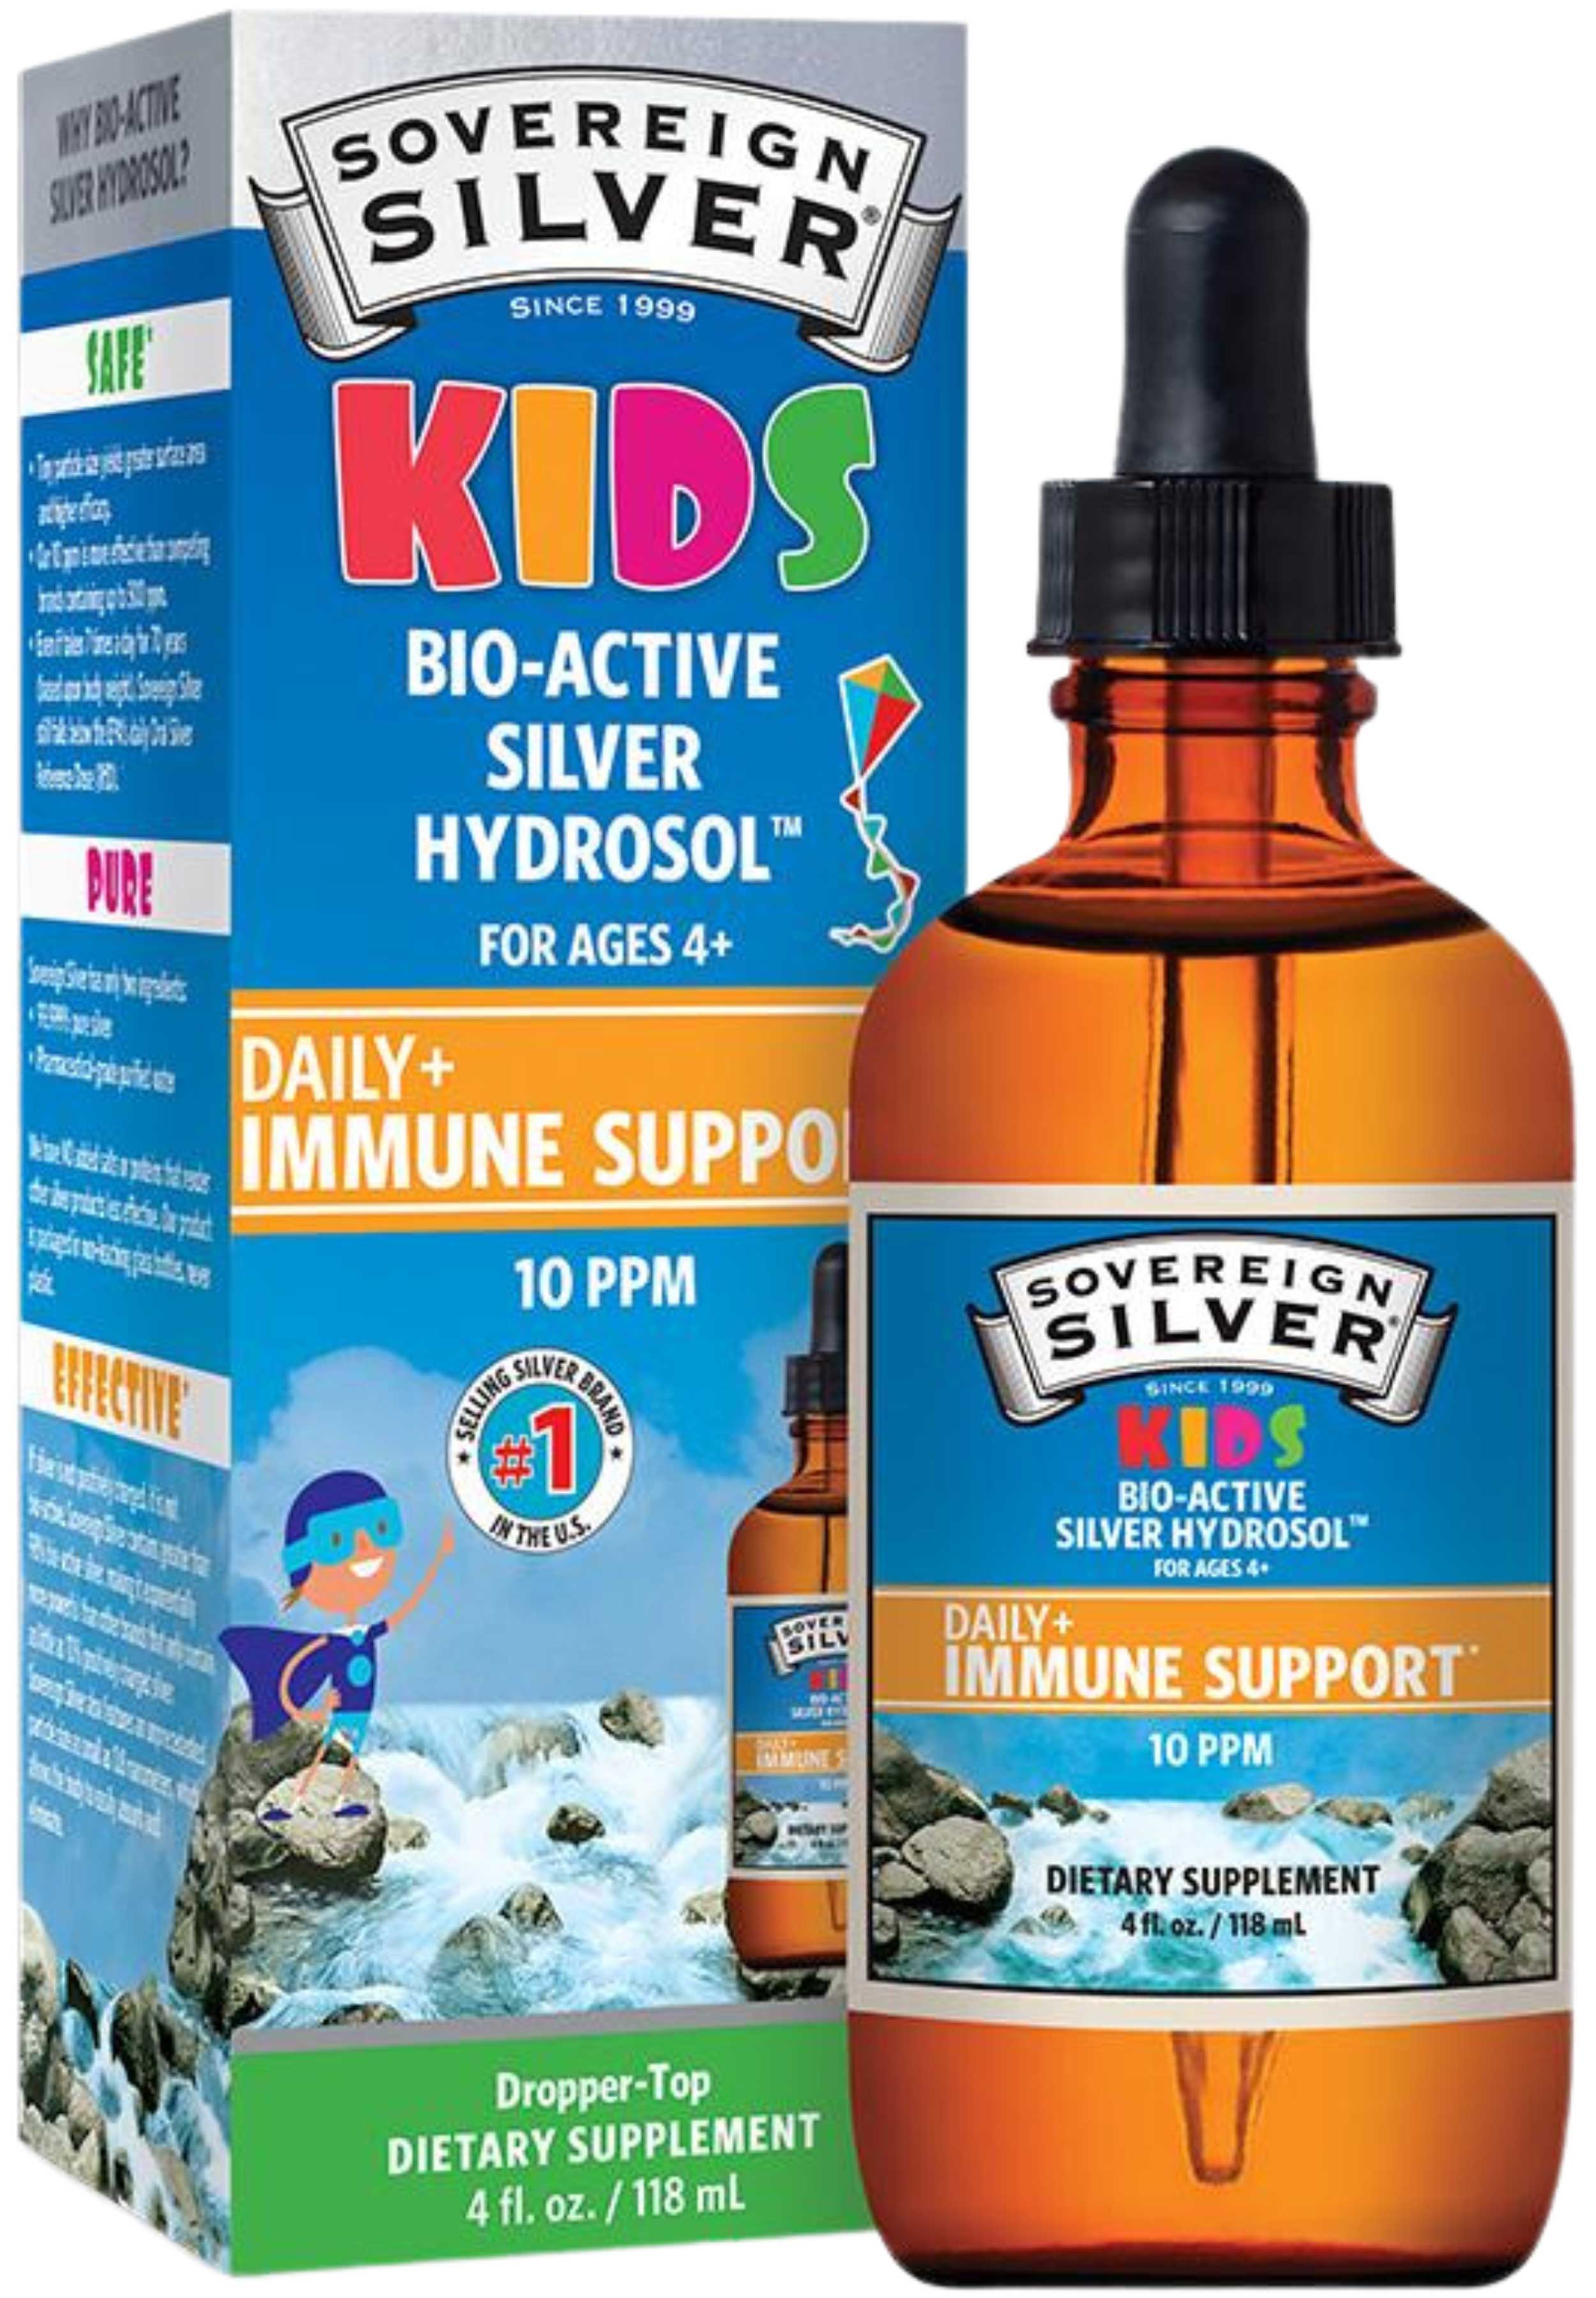 Sovereign Silver KIDS Bio-Active Silver Hydrosol - Dropper-Top